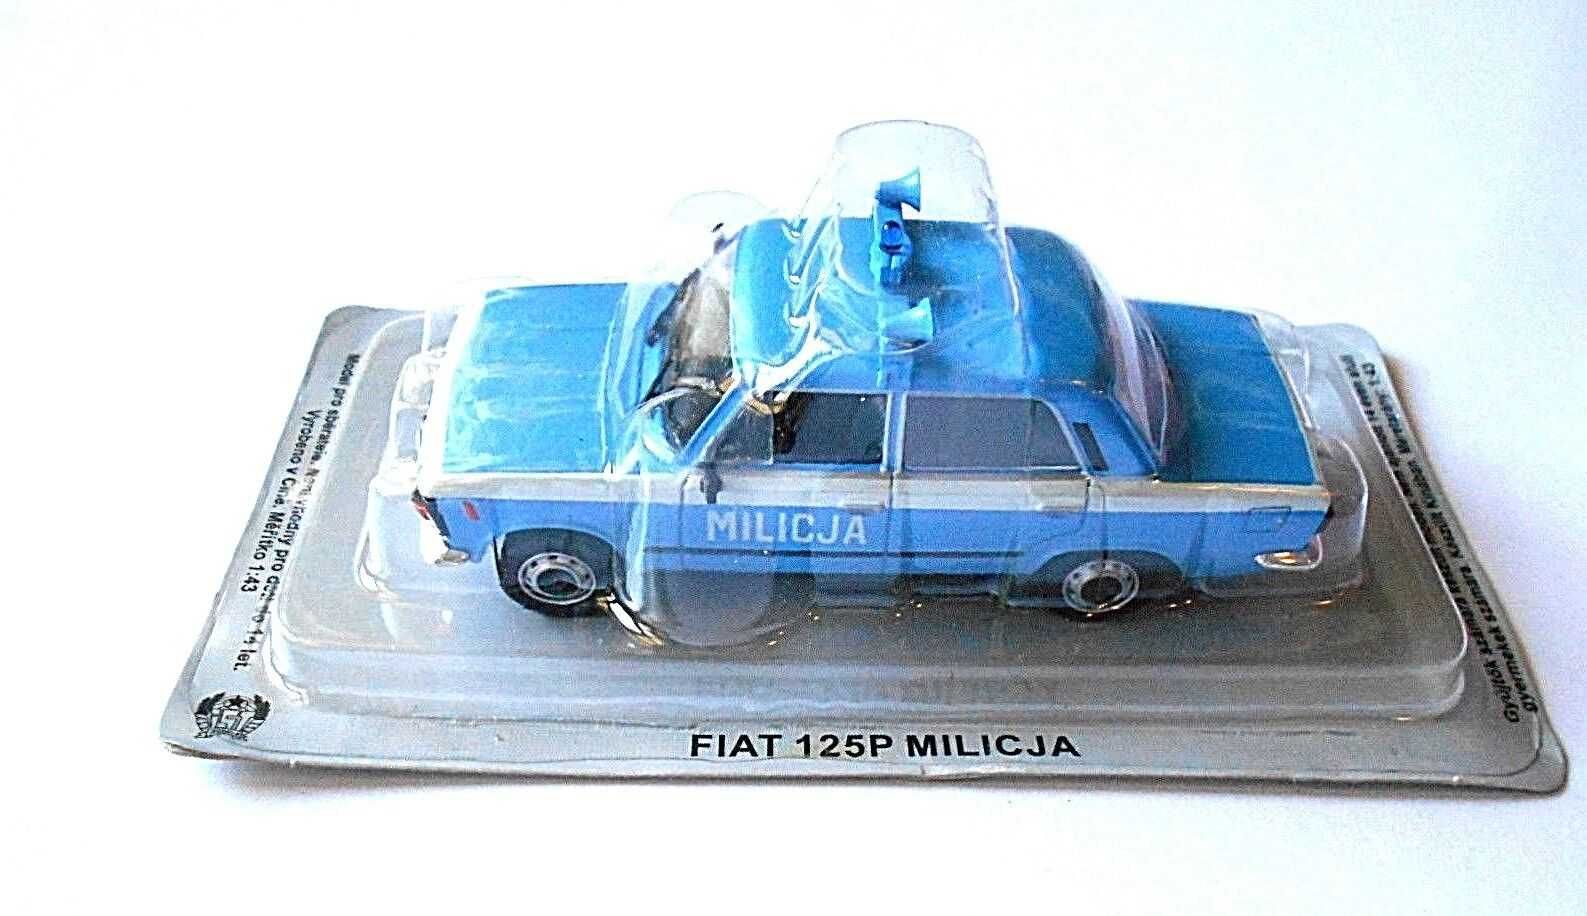 Macheta FIAT 125P MILITIA - DeAgostini Polonia, scara 1/43.